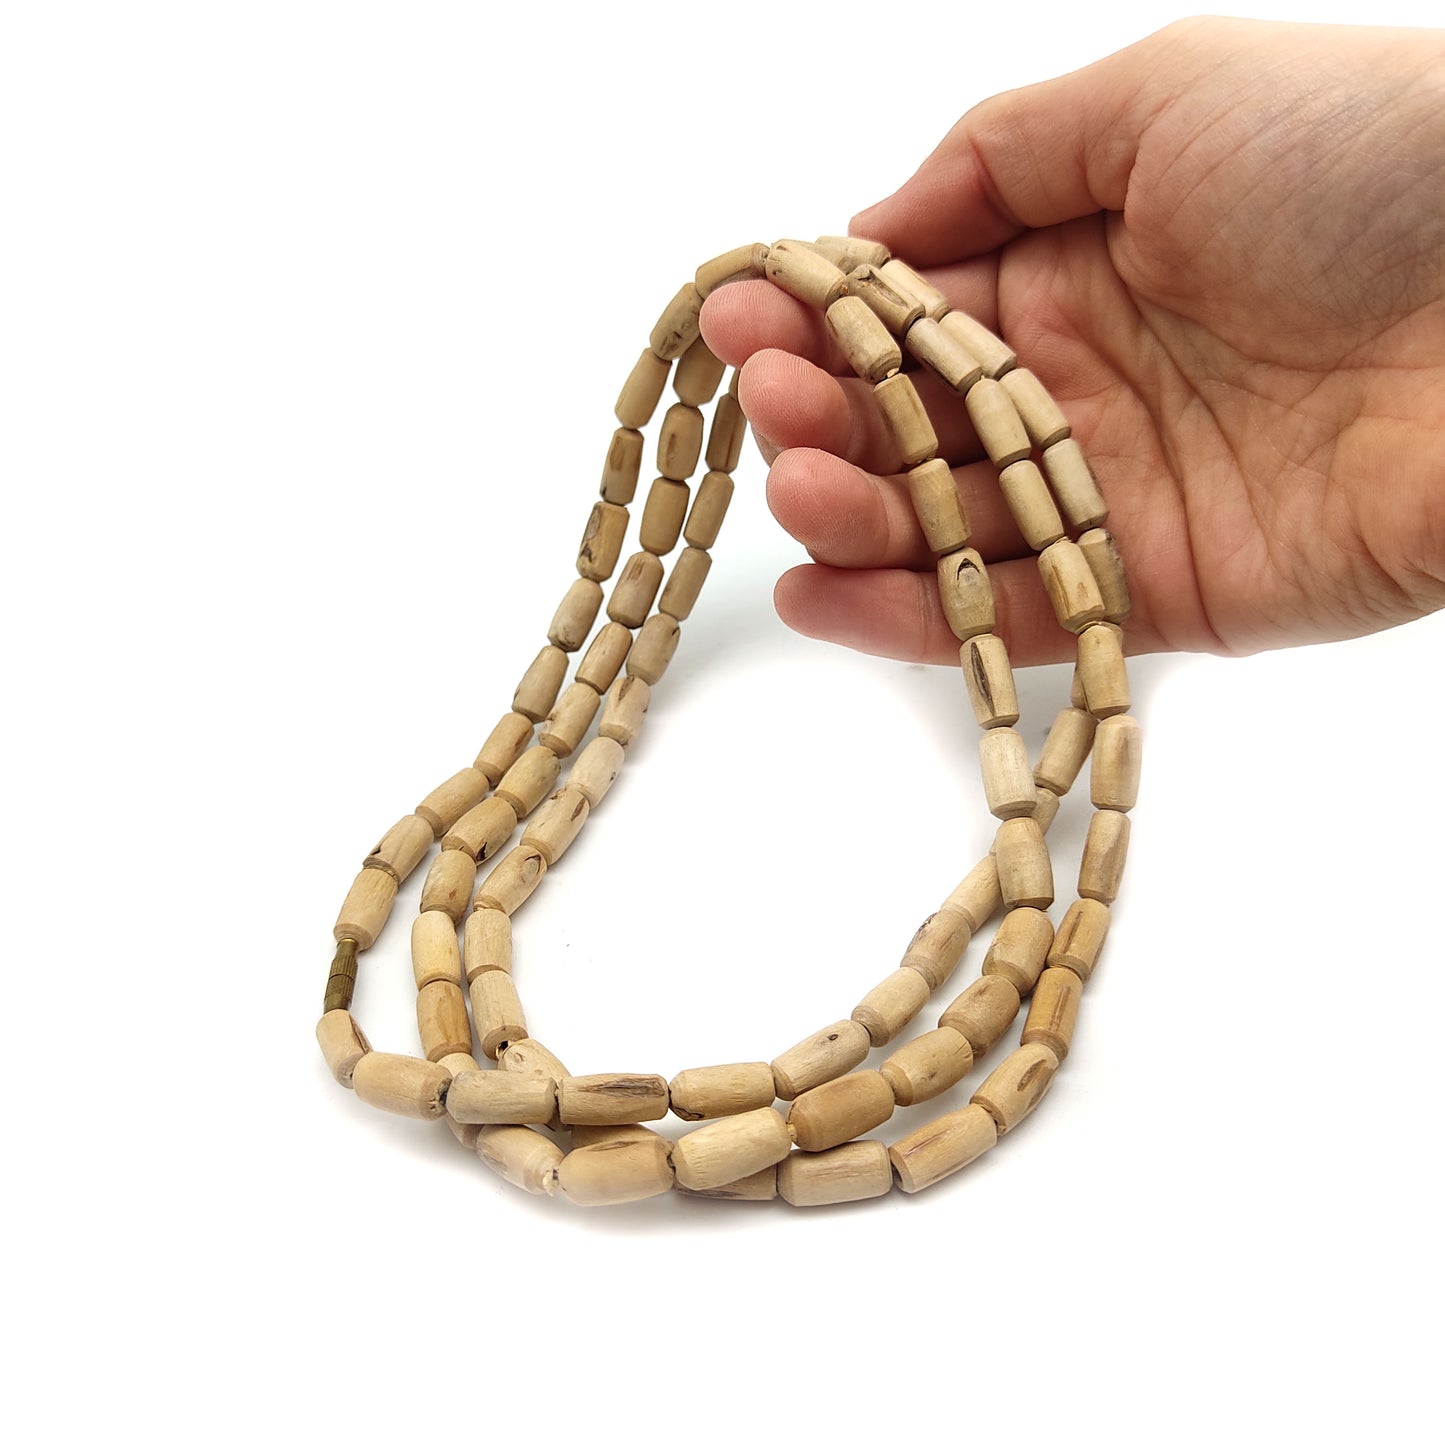 India Kunti Kanthi Tulasi Tulsi Handcrafted Holy Beads Necklace 100% Natural 49.5"